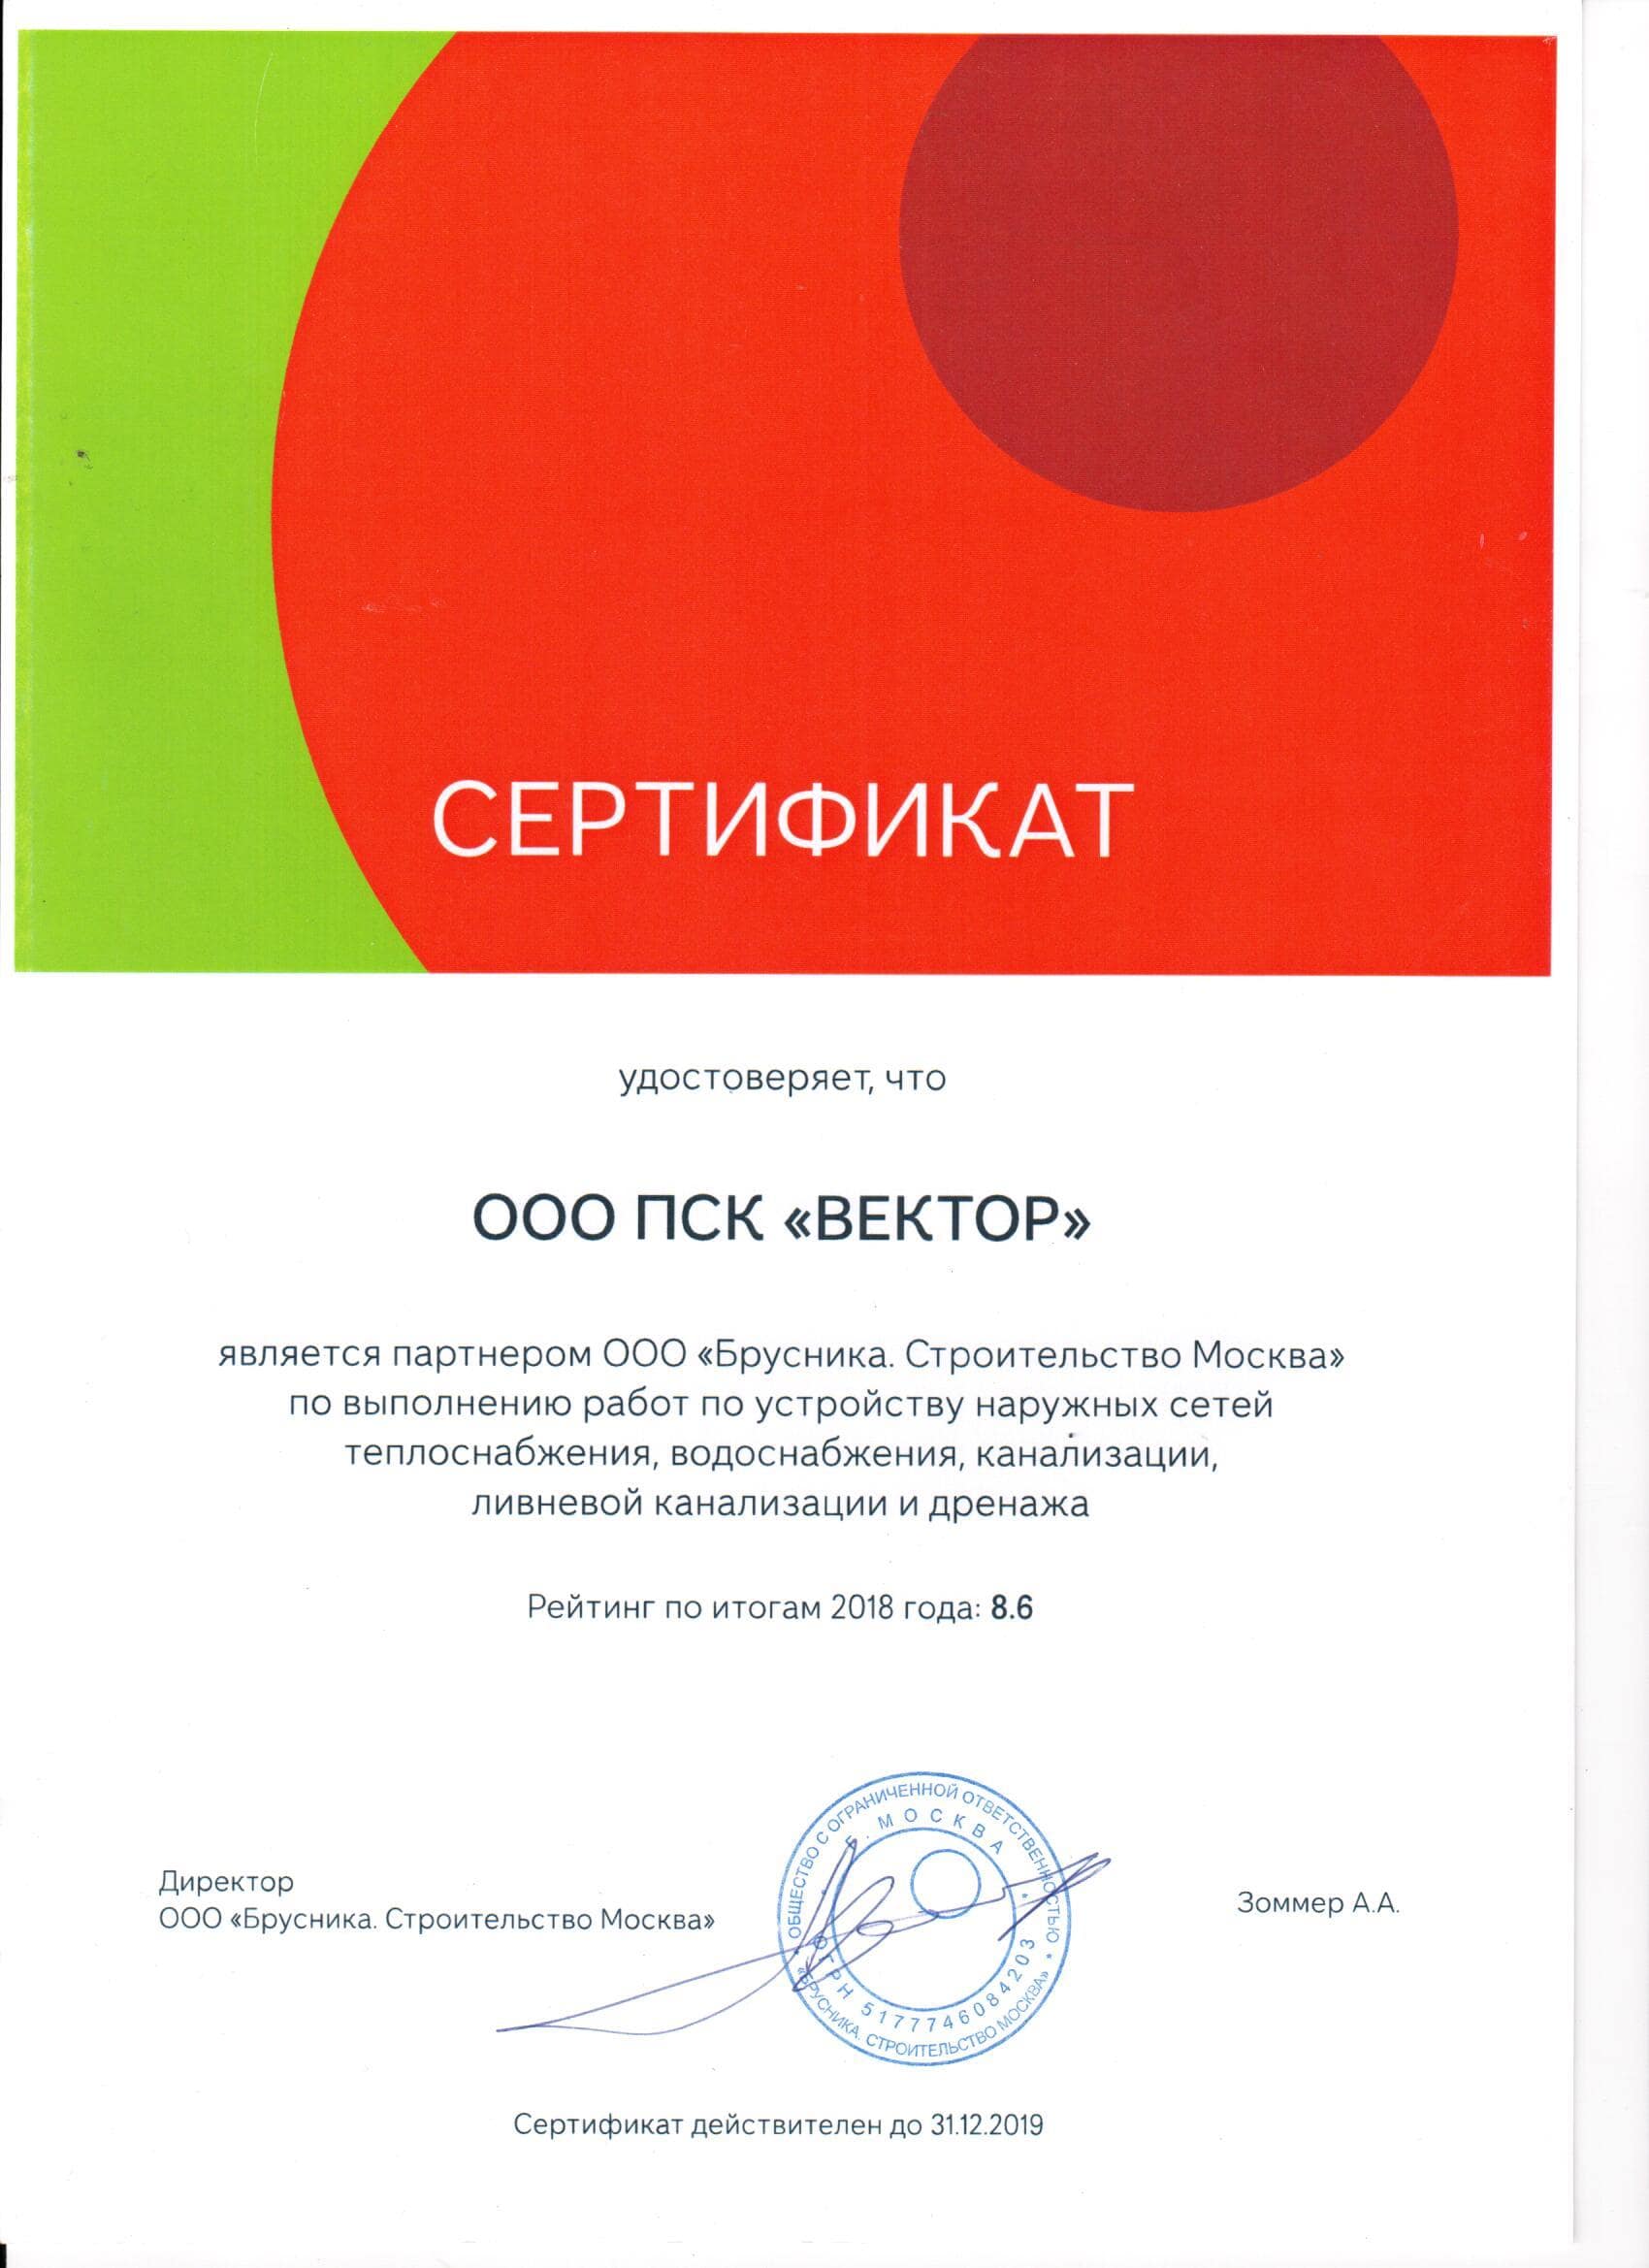 Сертификат от ООО «Брусника Строительство Мосвка»